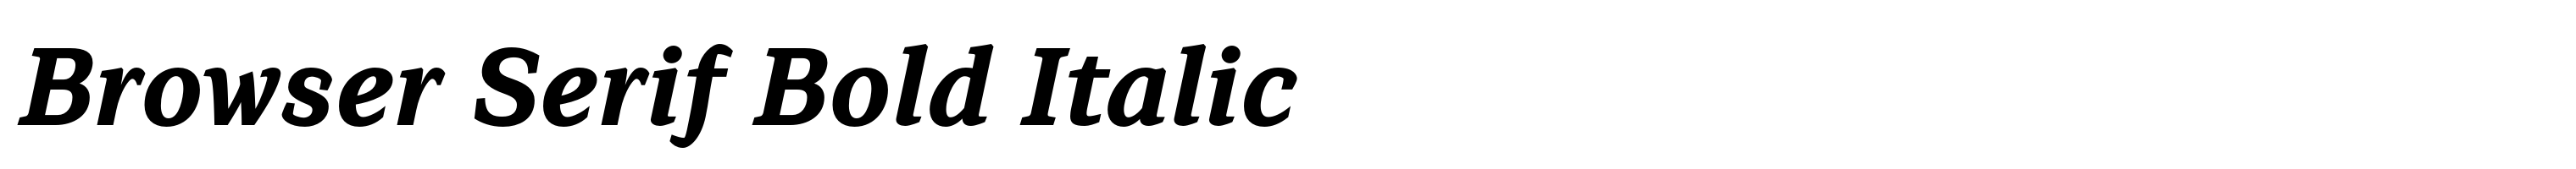 Browser Serif Bold Italic